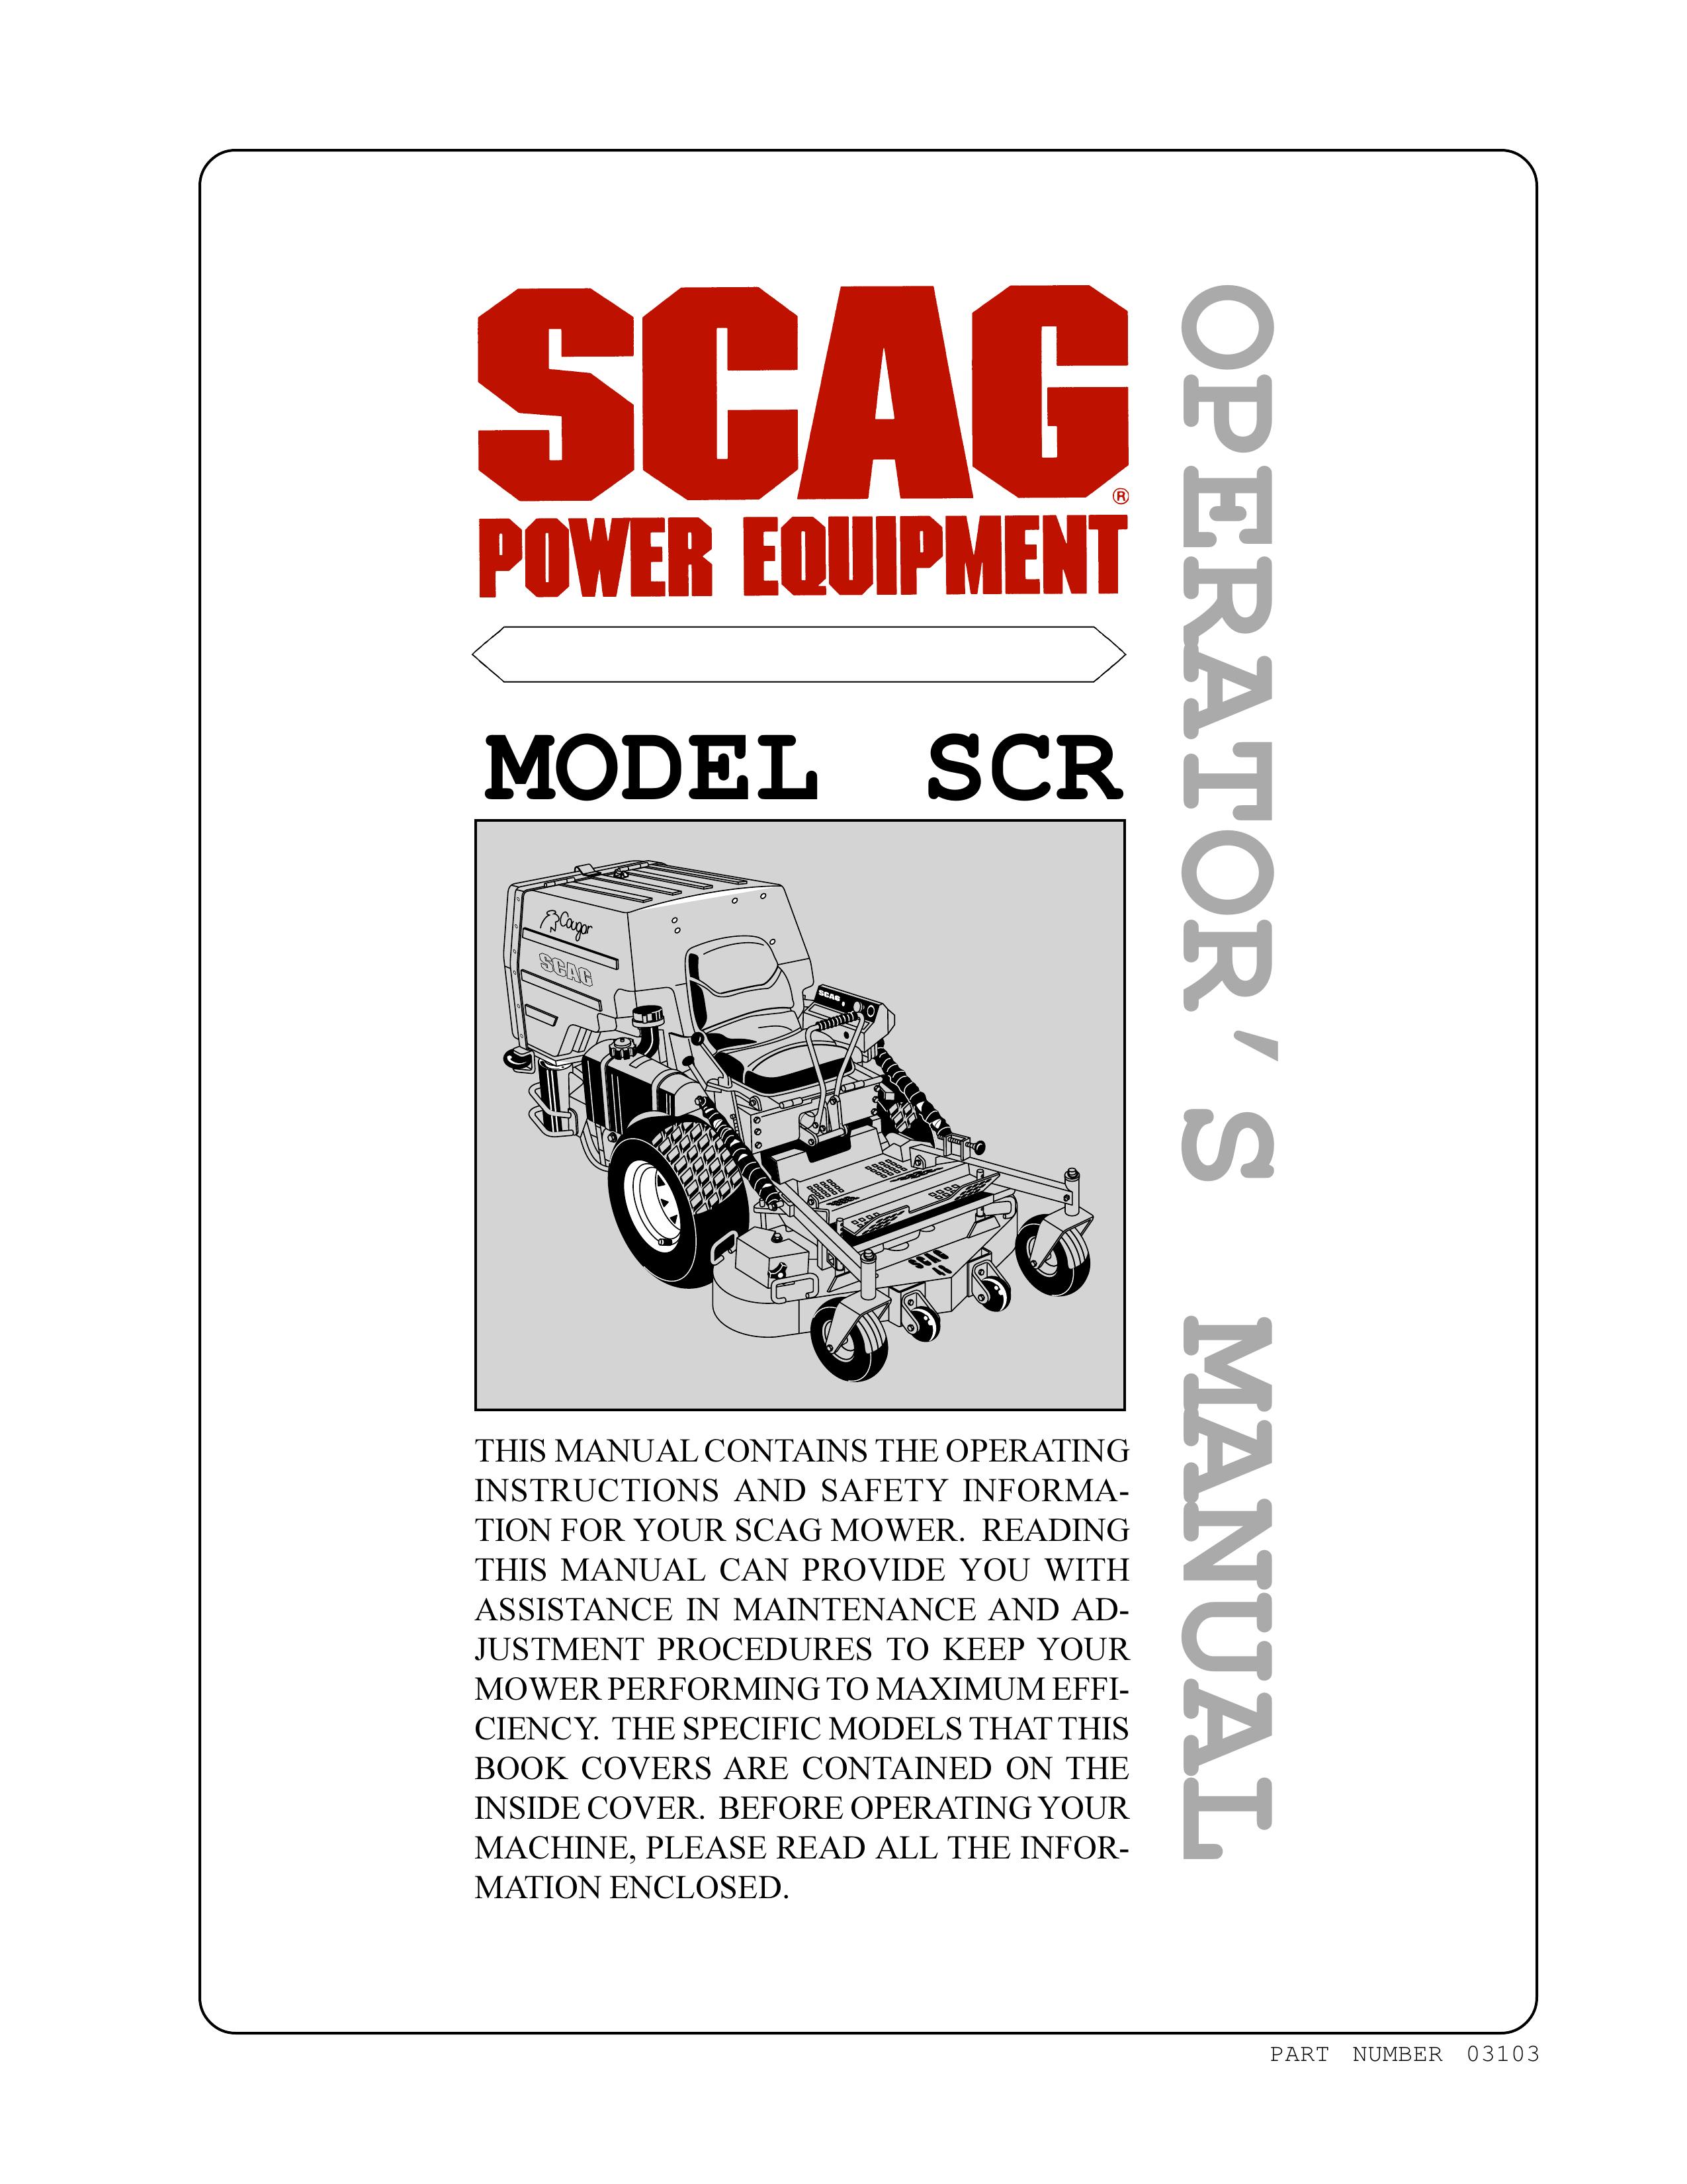 MB QUART SCR Lawn Mower User Manual